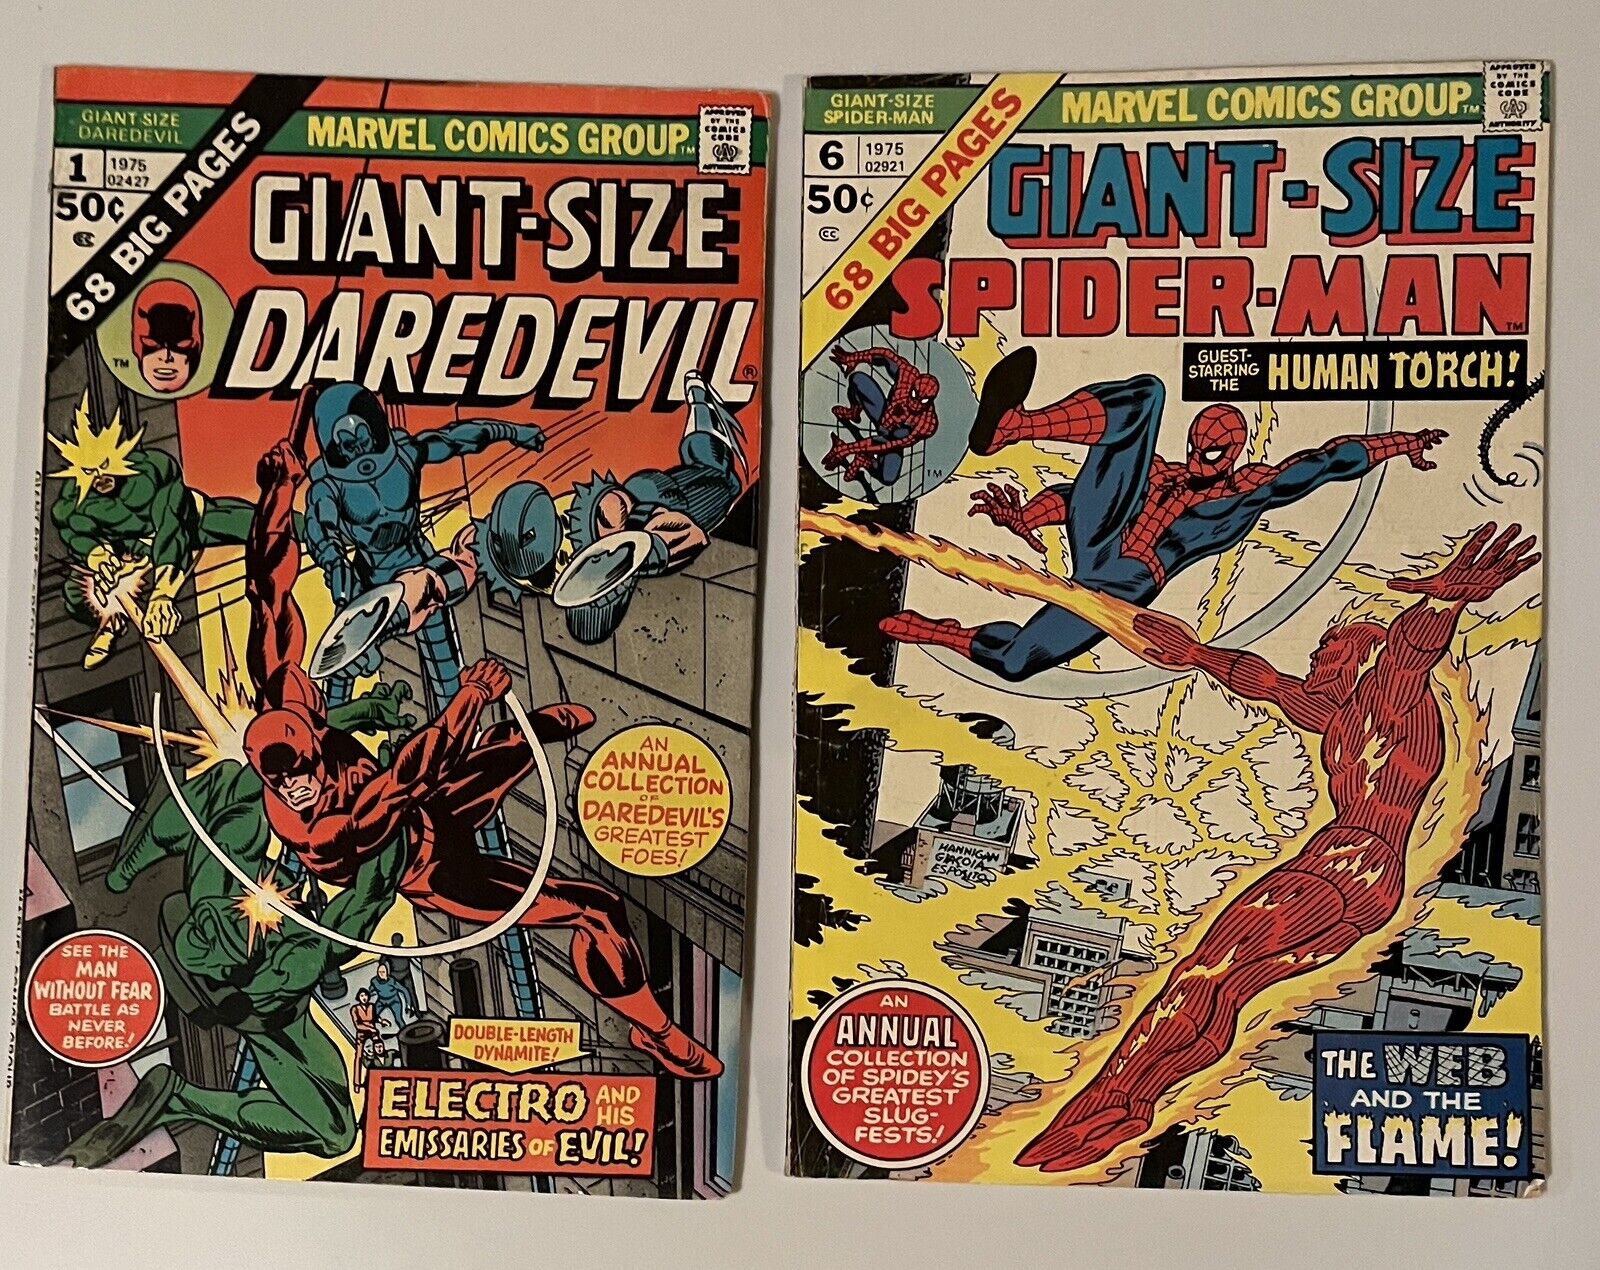 Giant-Size Daredevil #1 & Giant-Size Spider-Man #6 (Marvel, 1975) Fine